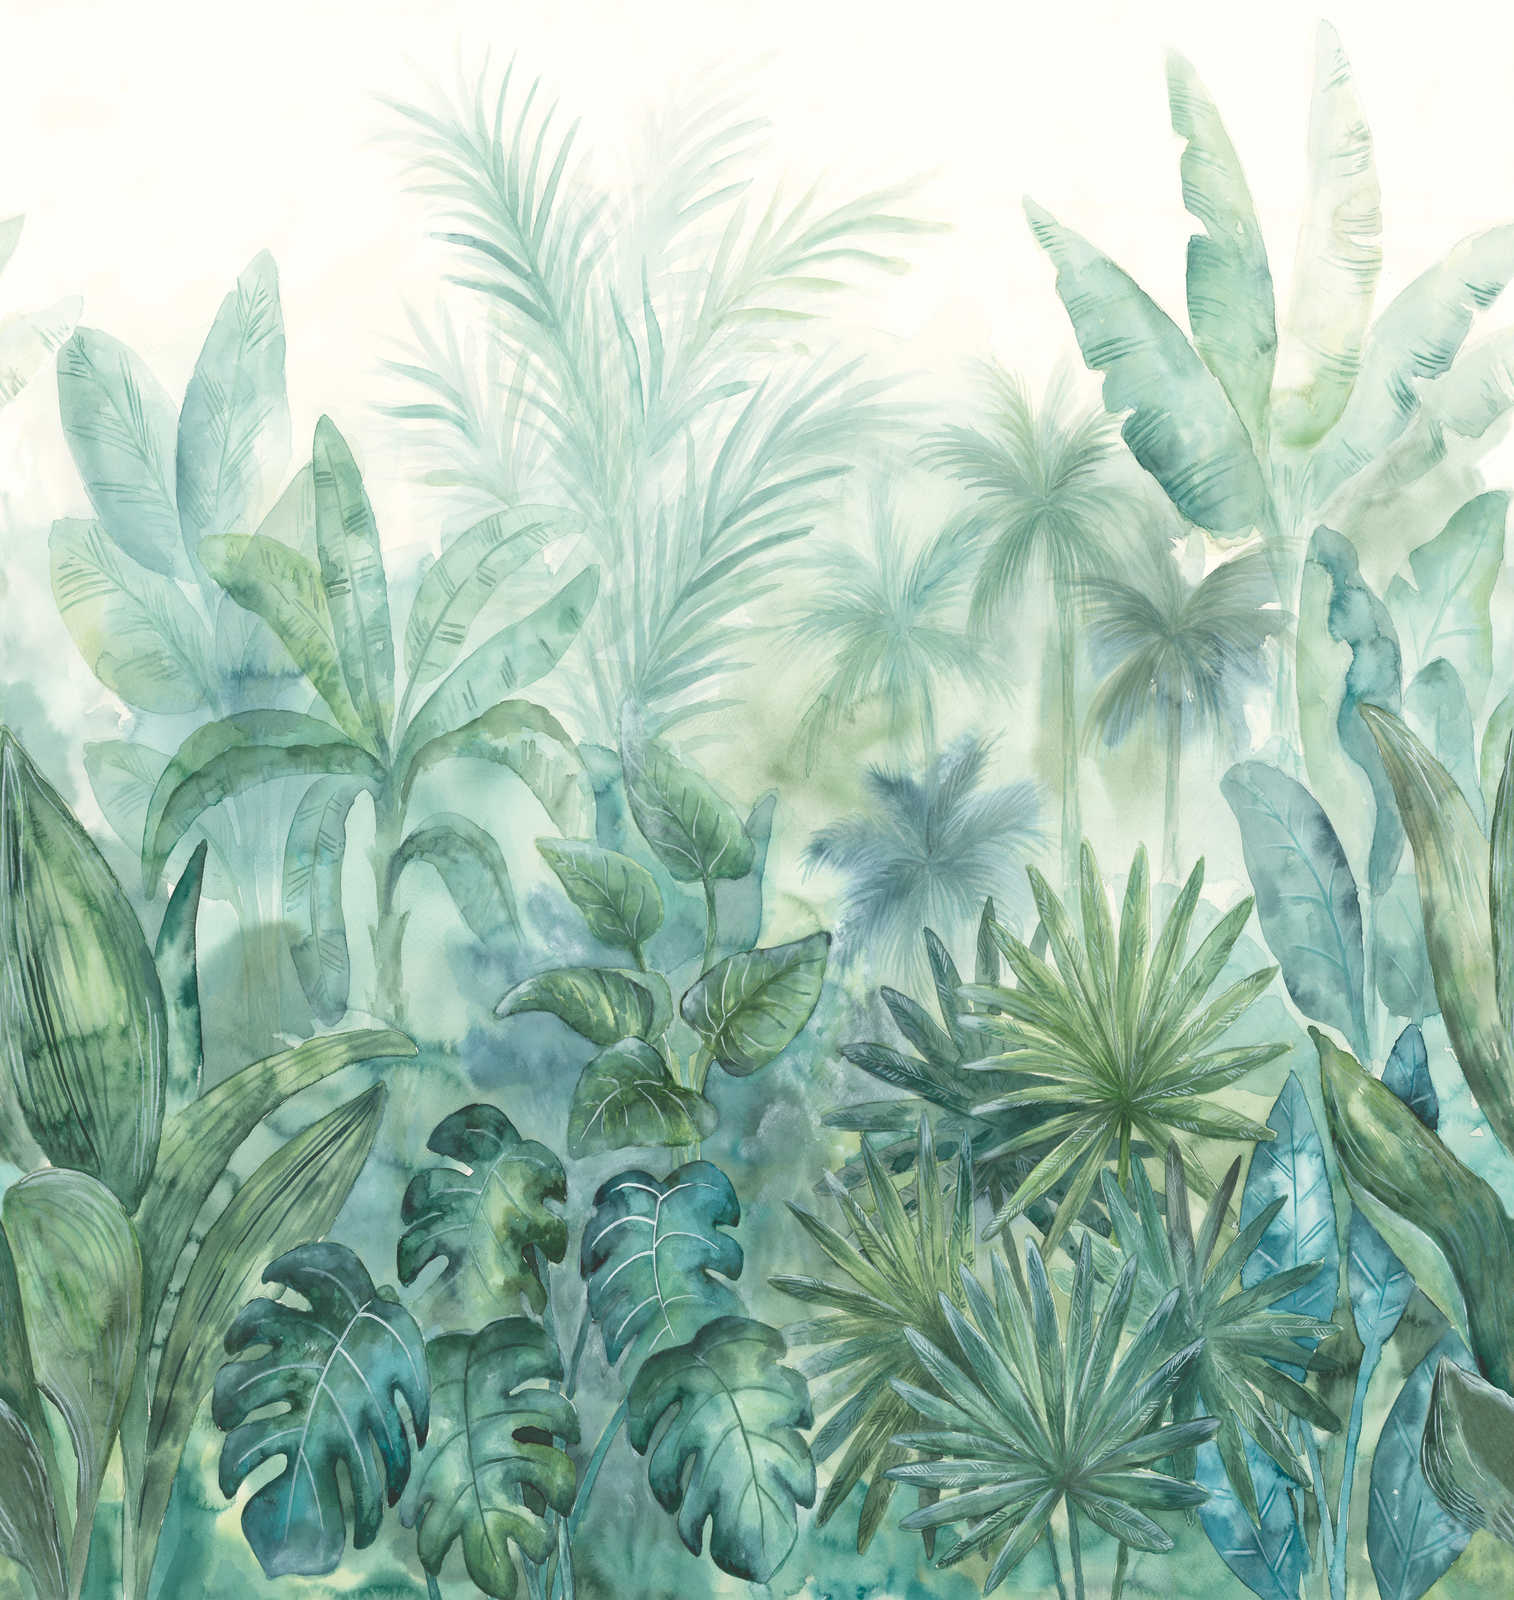             Watercolour jungle motif wallpaper - green, blue, cream
        